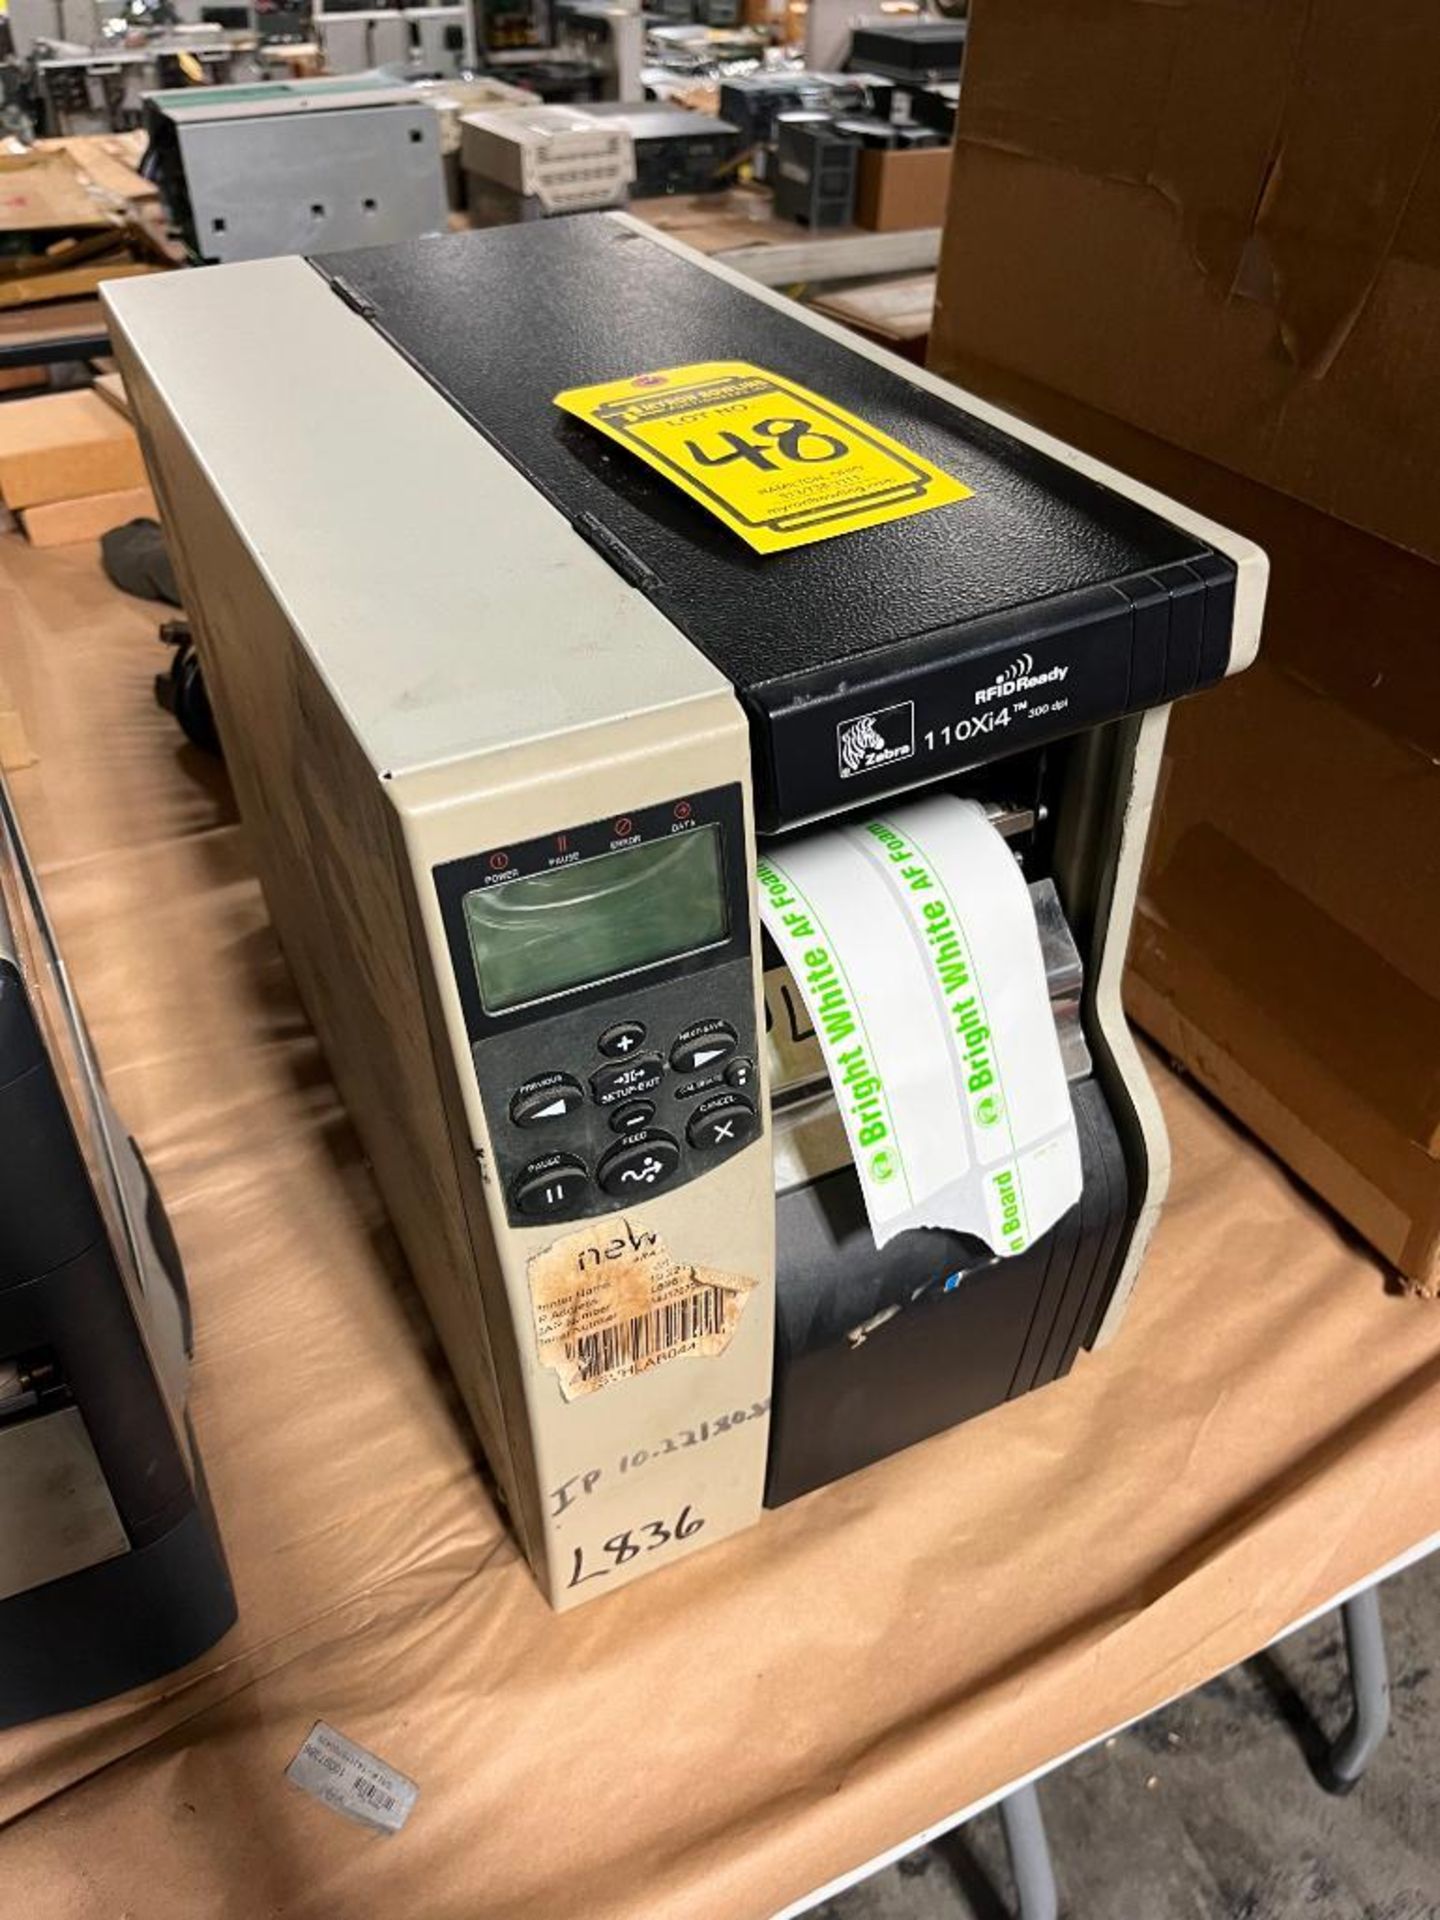 Zebra Printer, Model 110XI4 - Image 2 of 2